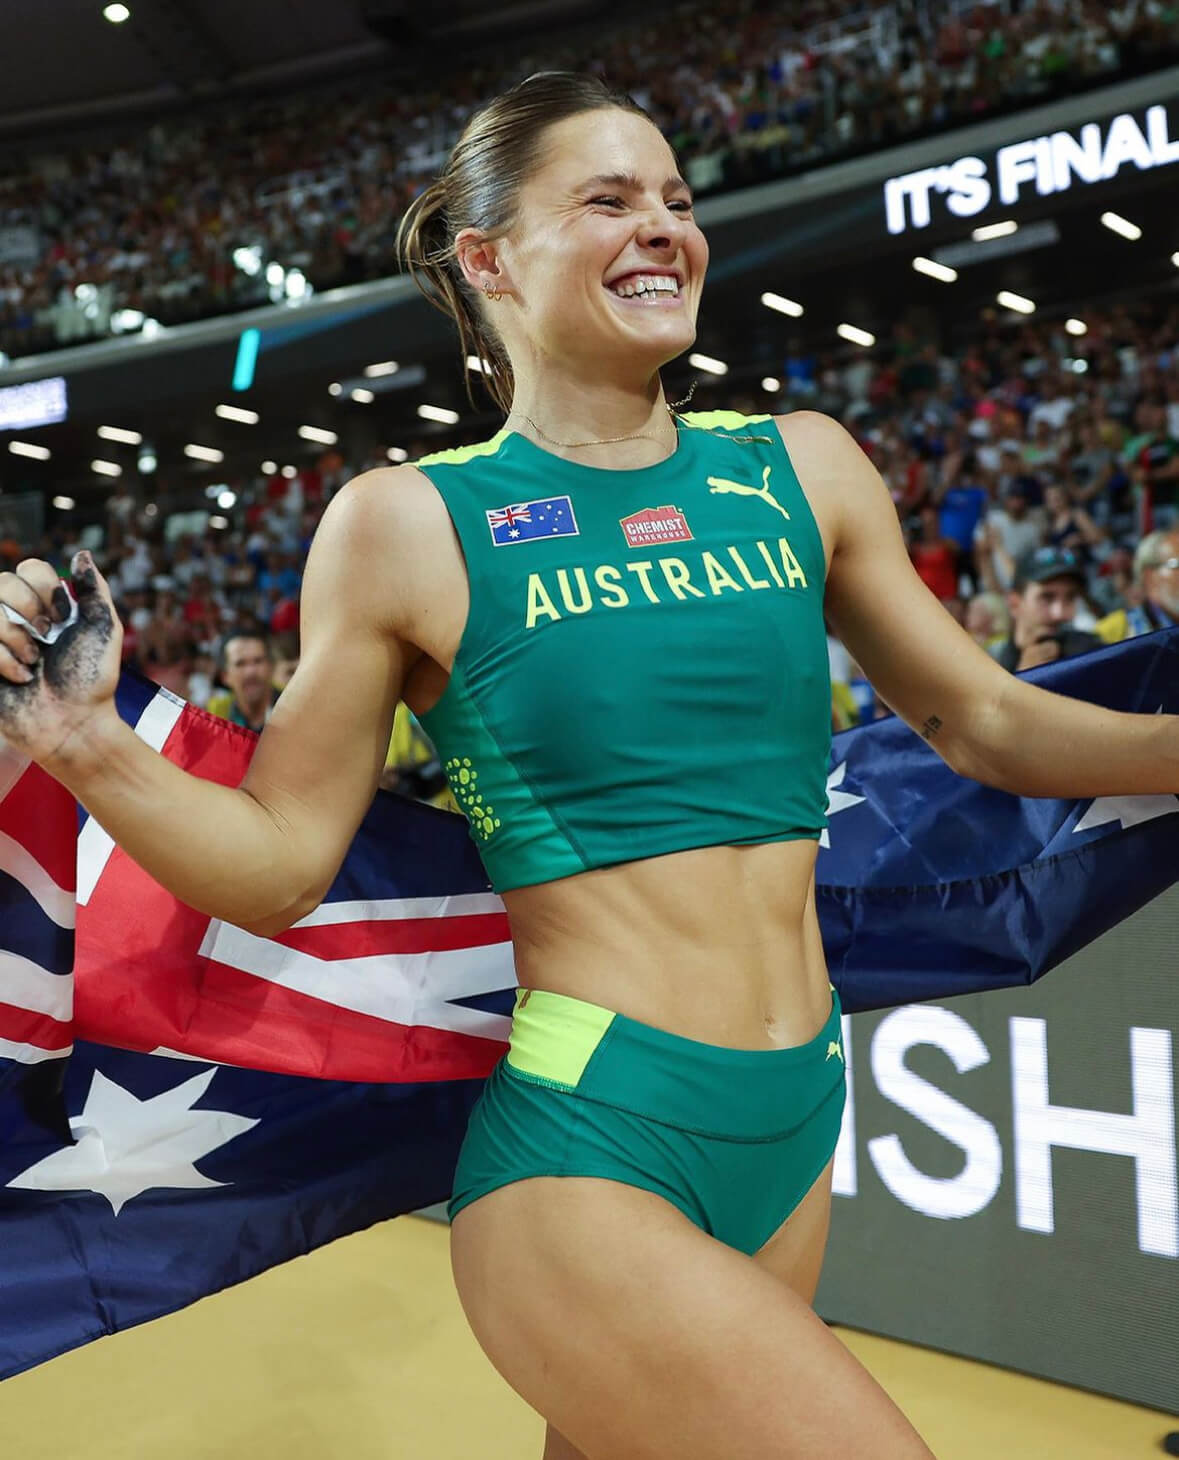 Nina Kennedy celebrating as World Champion wearing Australian flag